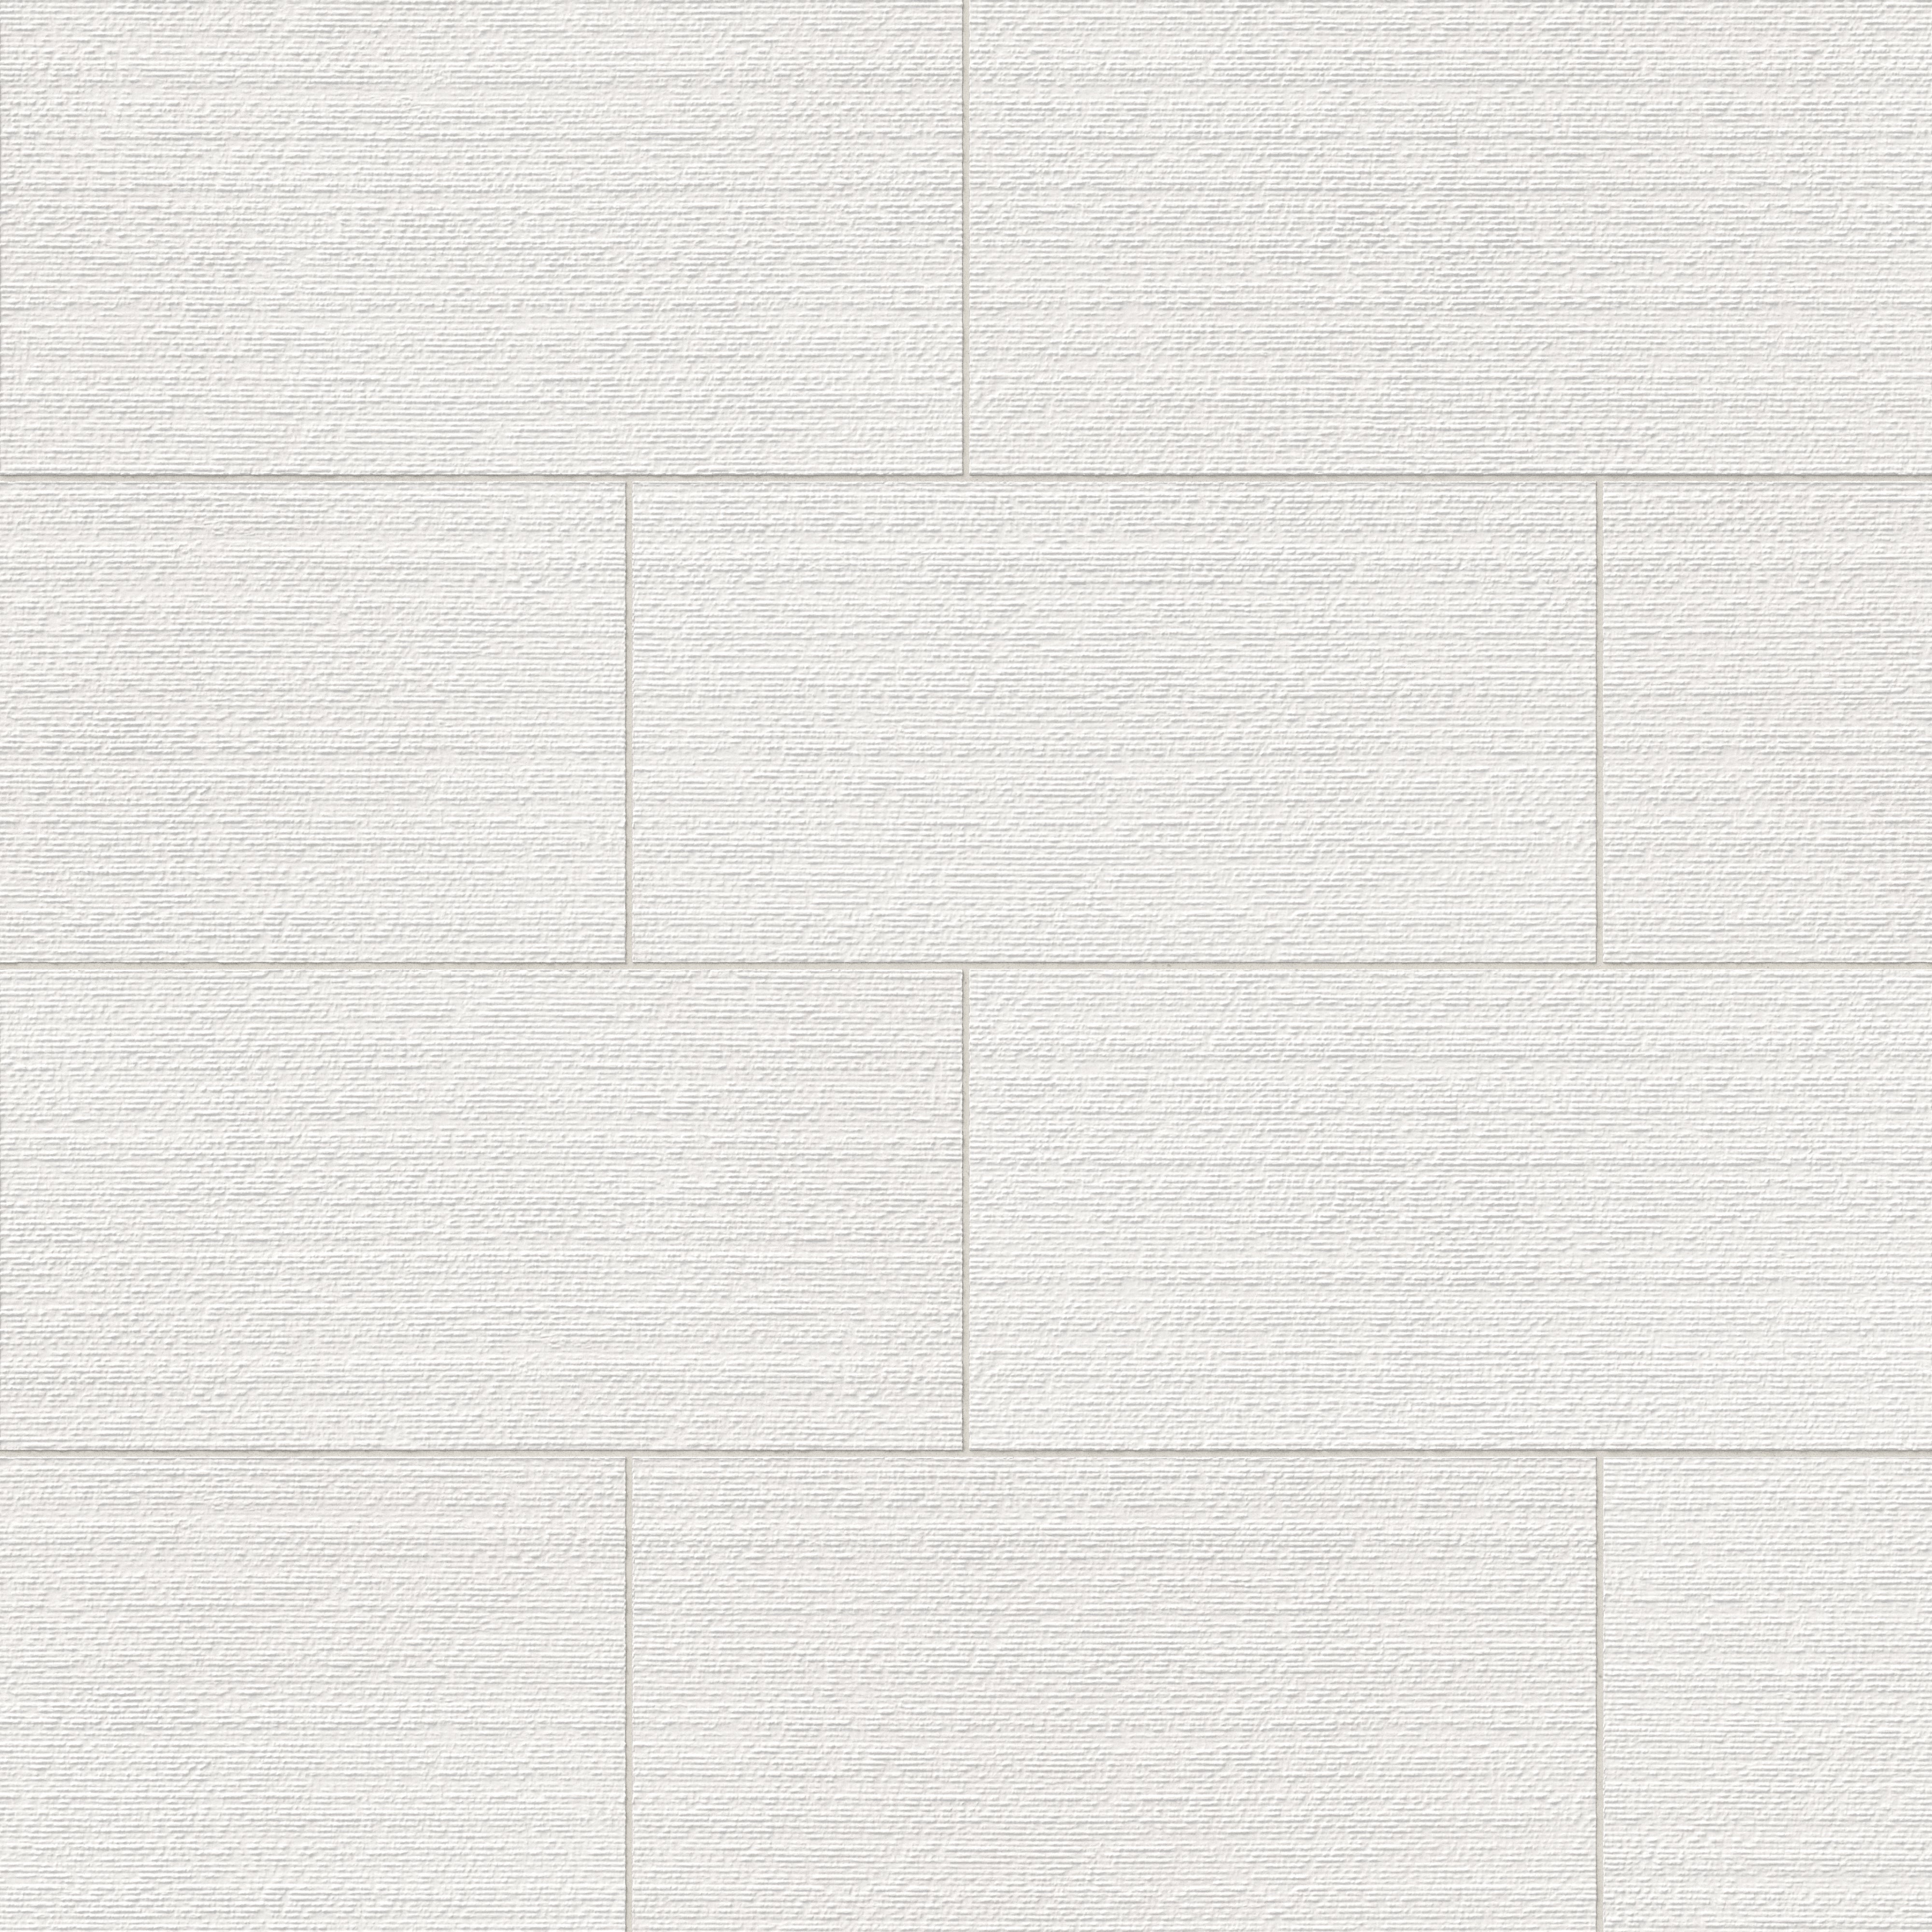 Palmer 12x24 Chiseled Porcelain Tile in White